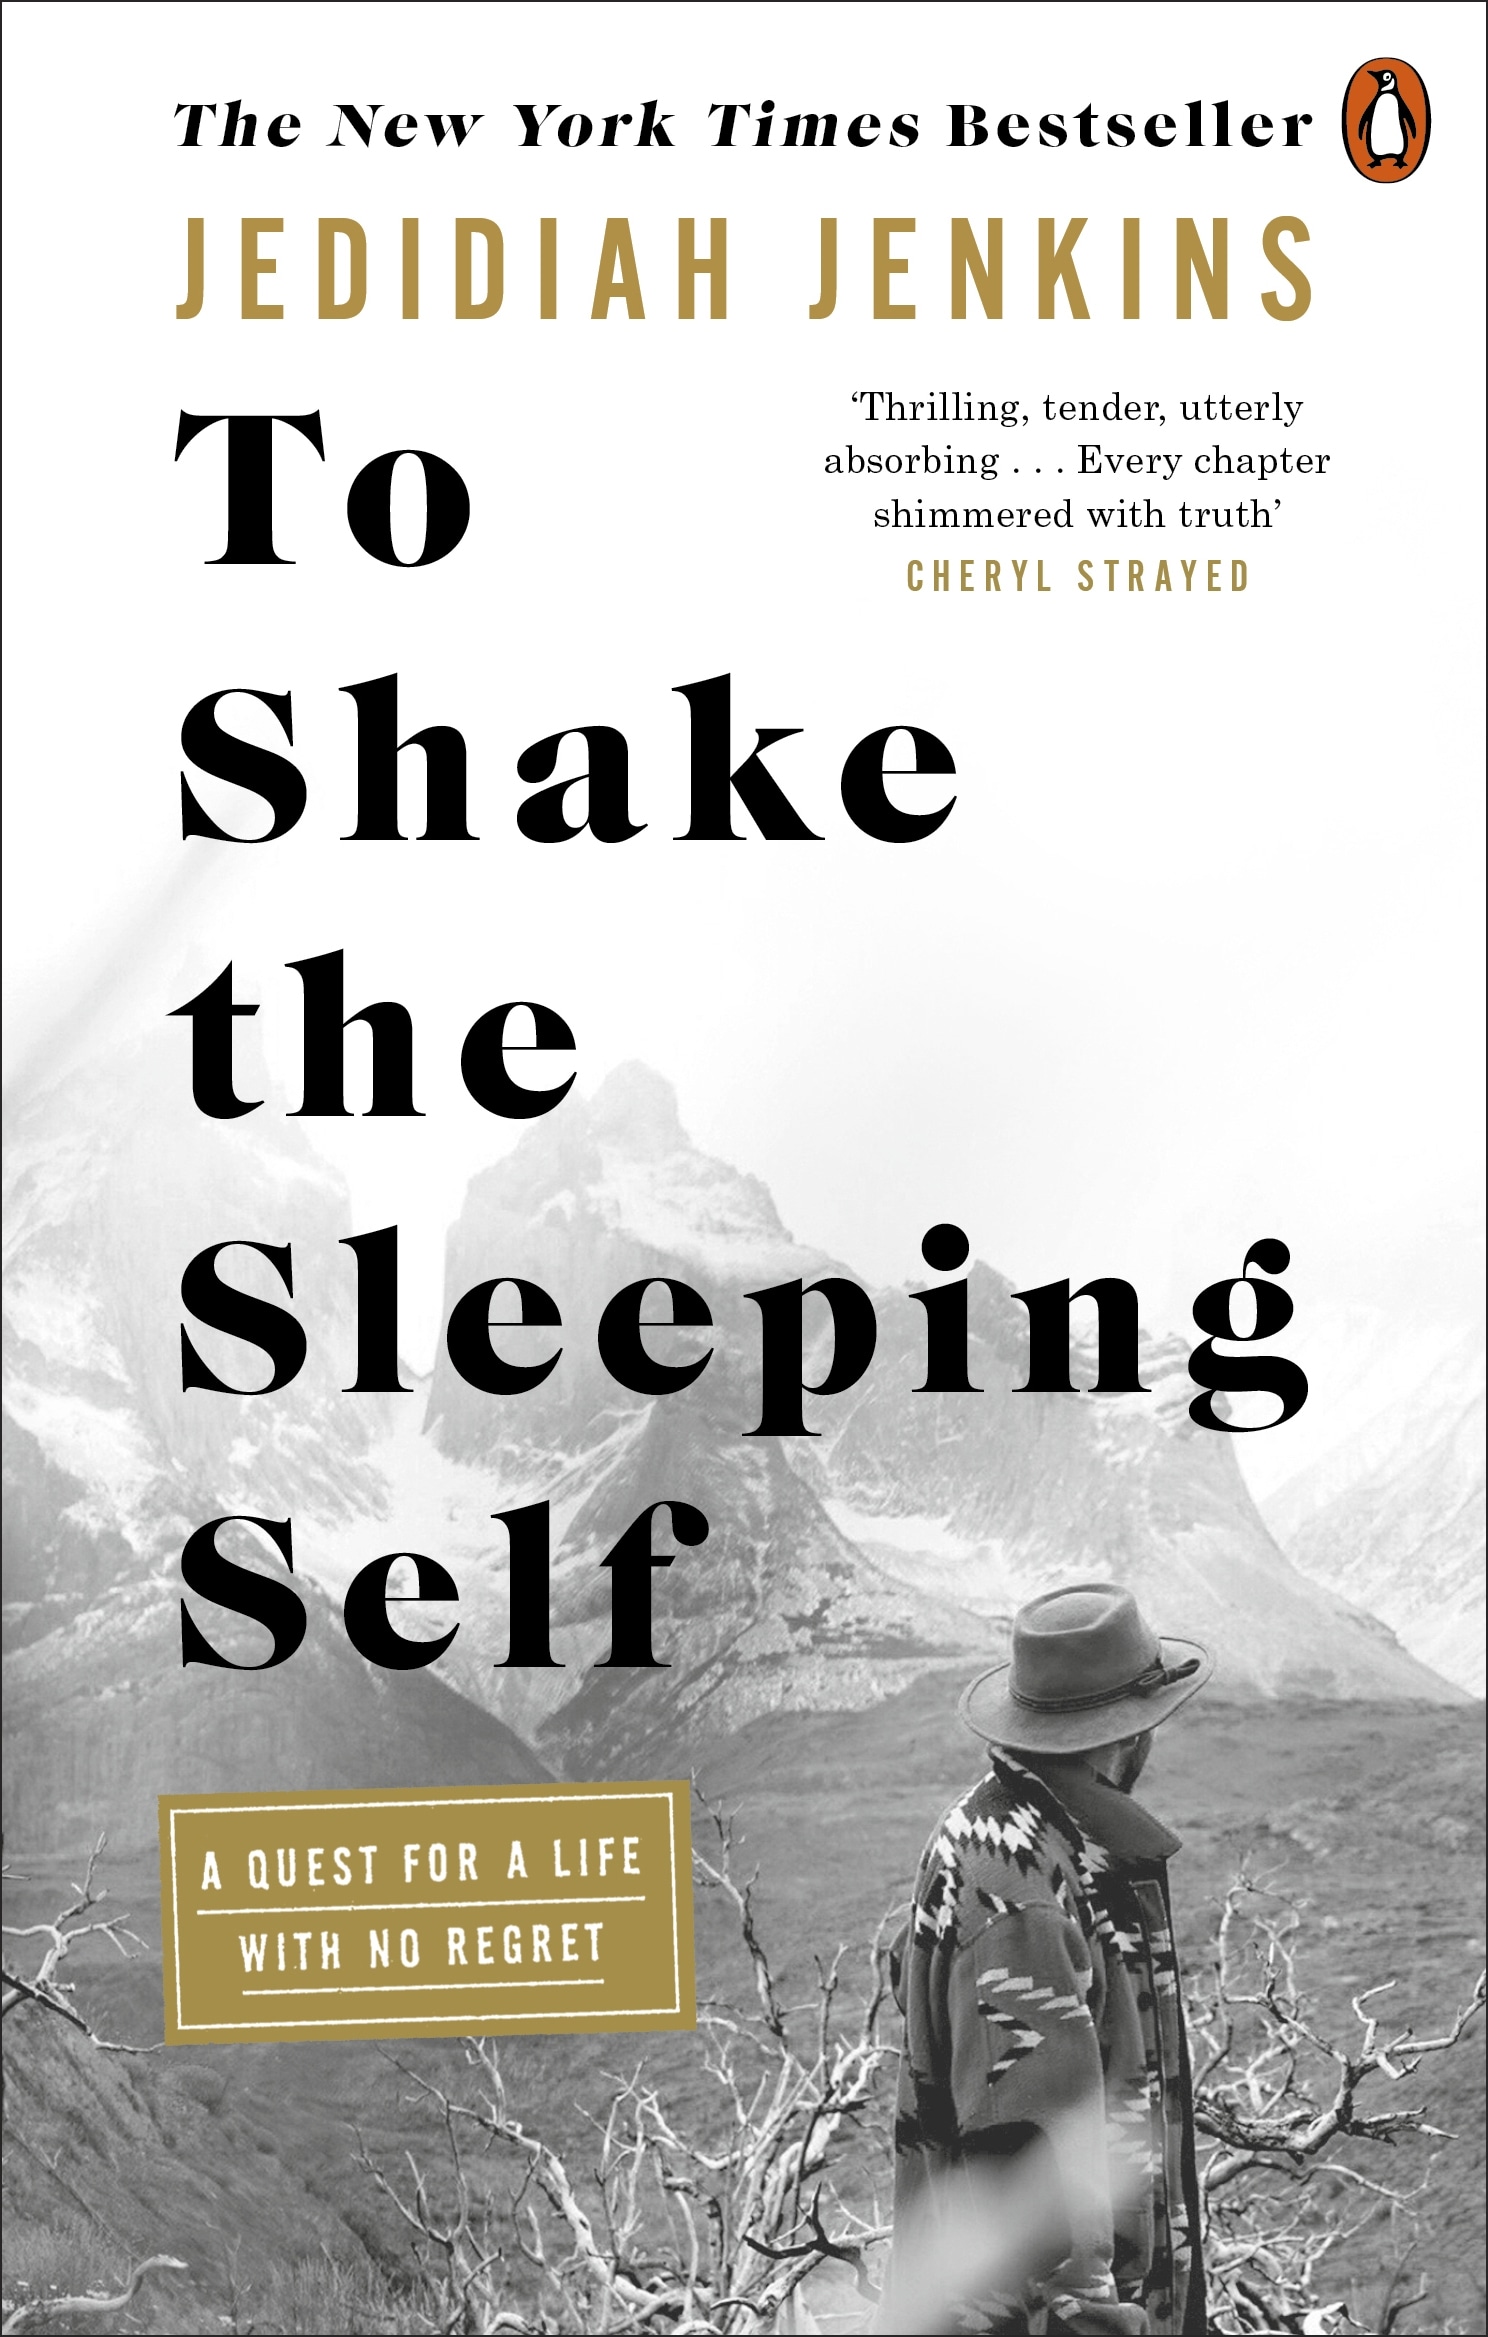 Book “To Shake the Sleeping Self” by Jedidiah Jenkins — February 11, 2021